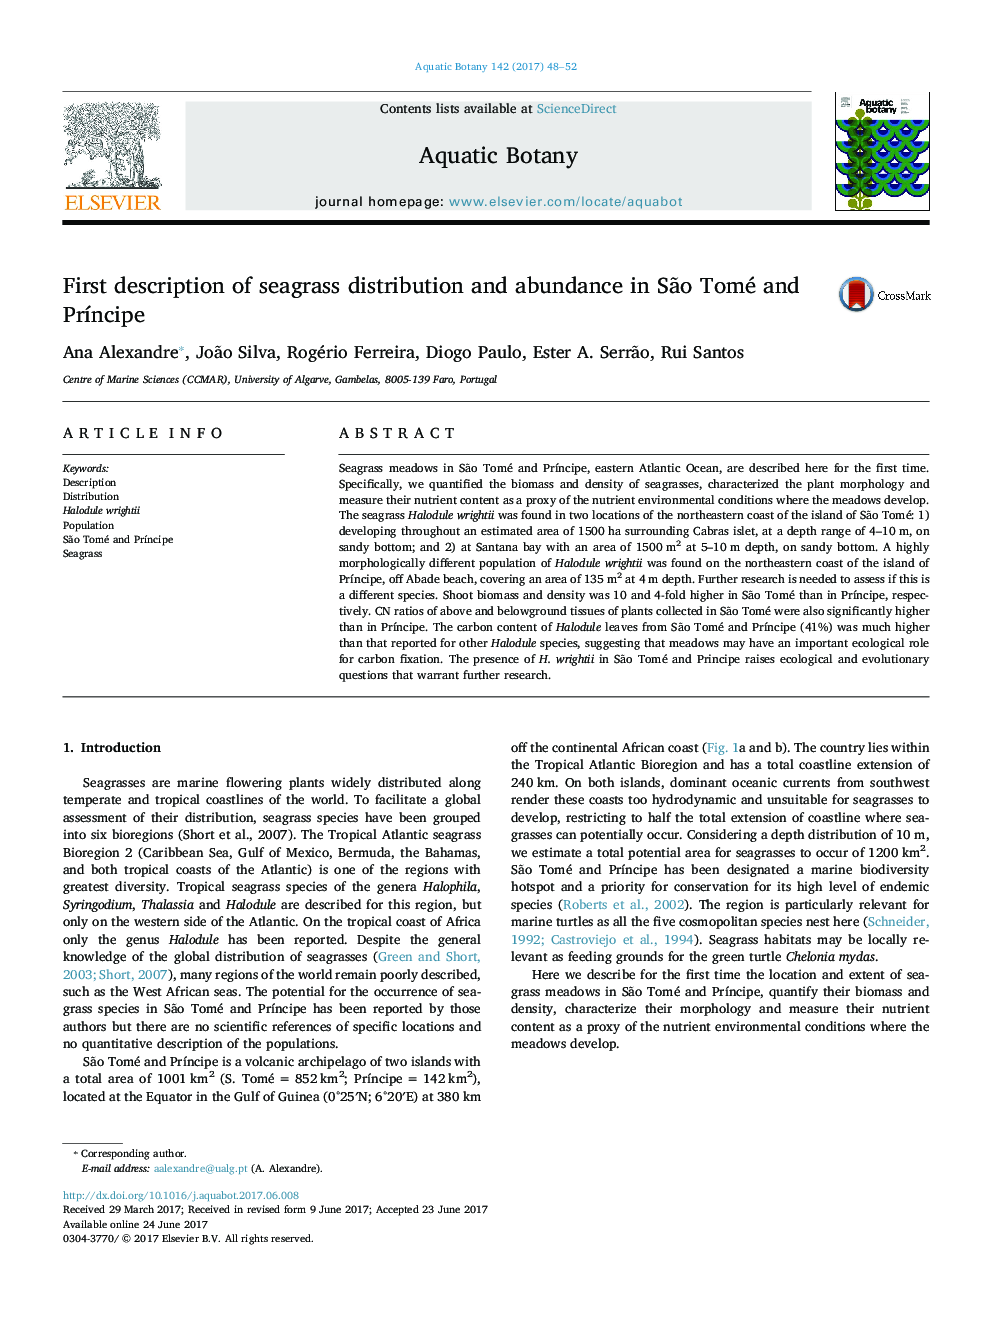 First description of seagrass distribution and abundance in SÃ£o Tomé and PrÃ­ncipe